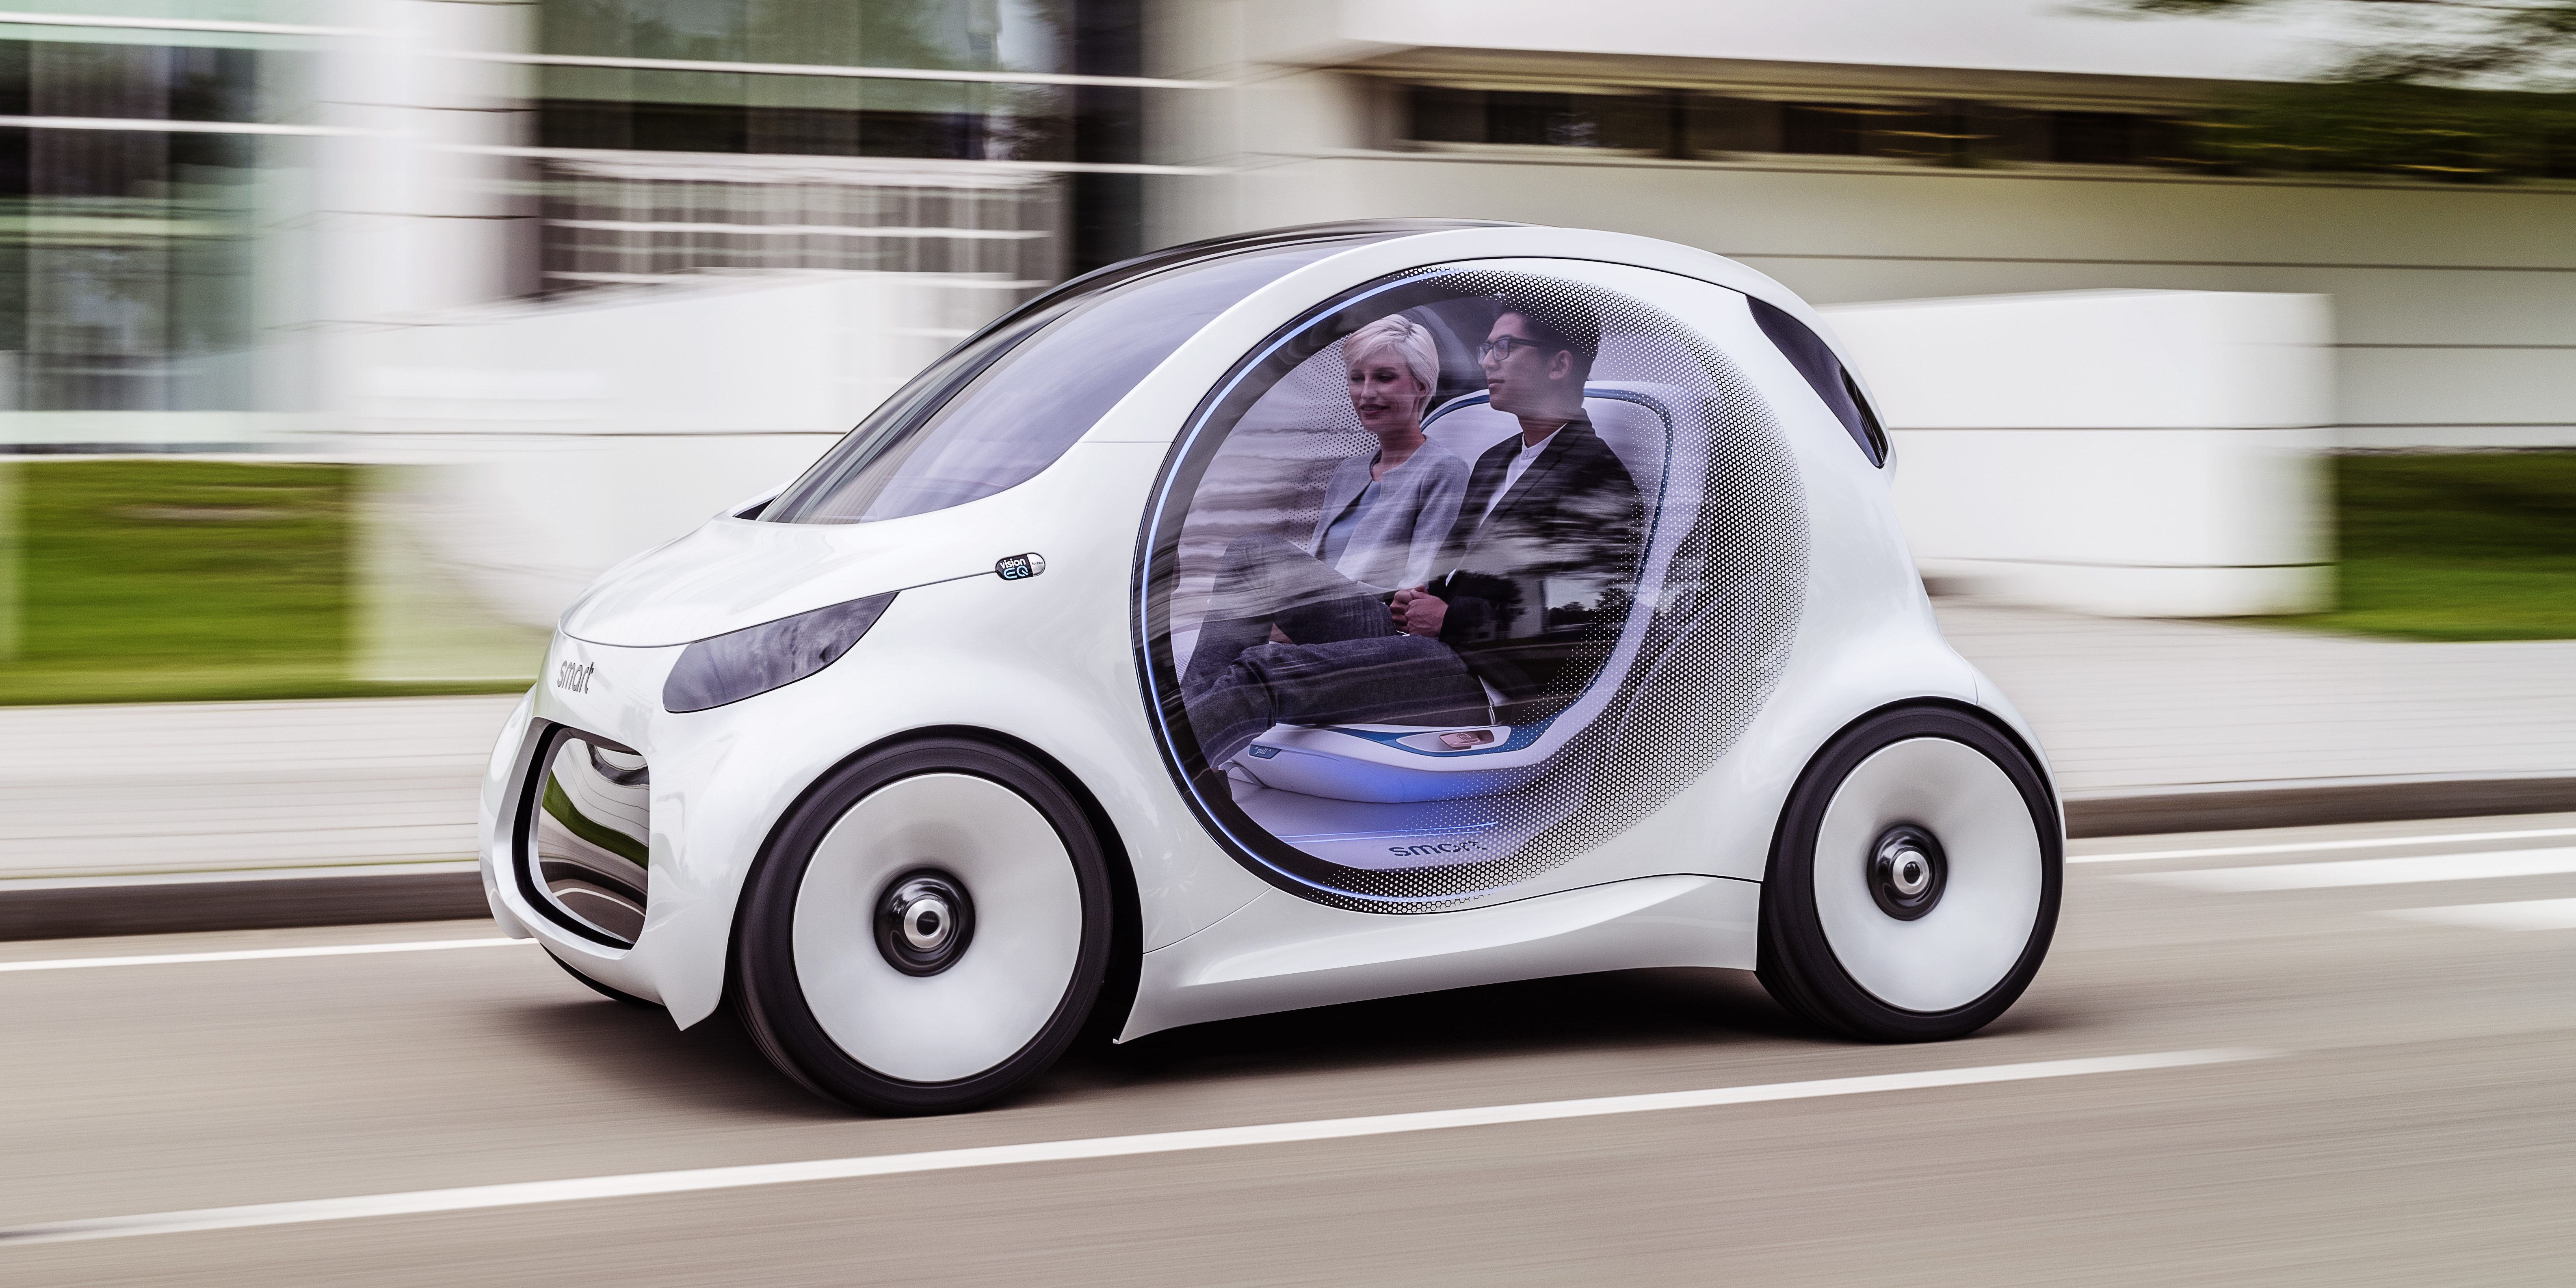 Mercedes unveils a new all-electric and autonomous Smart prototype